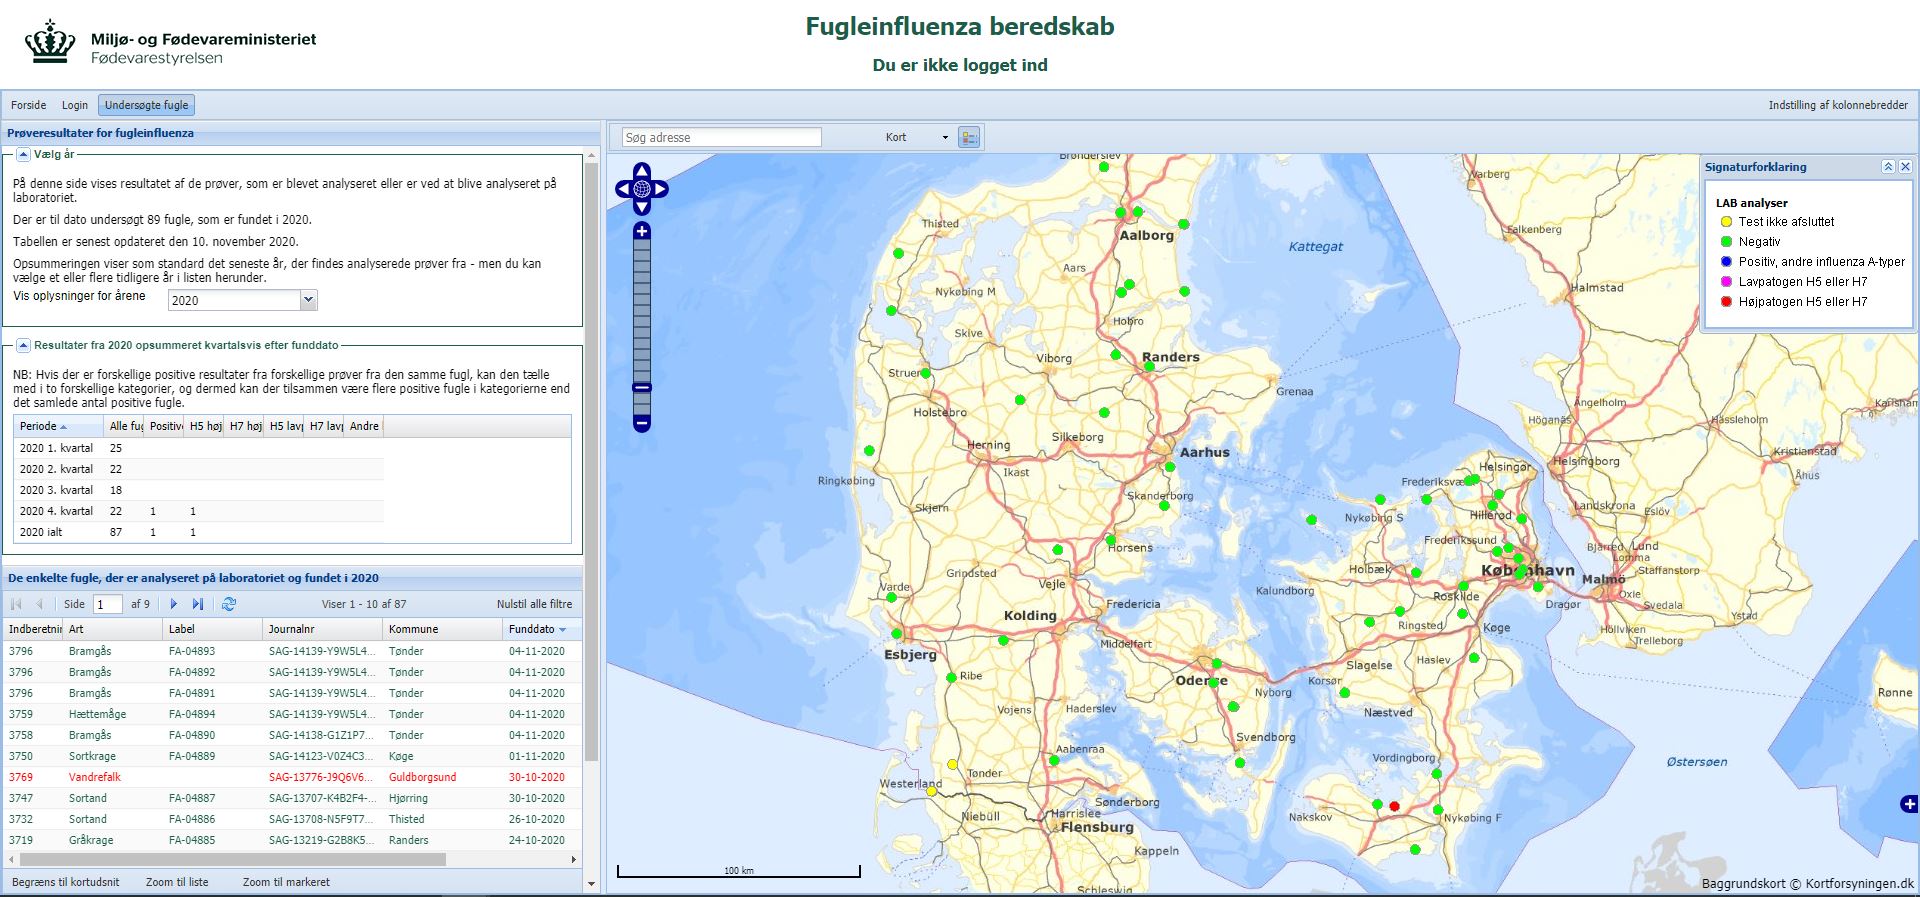 Verbreitungskarte der Aviären Influenza in Dänemark